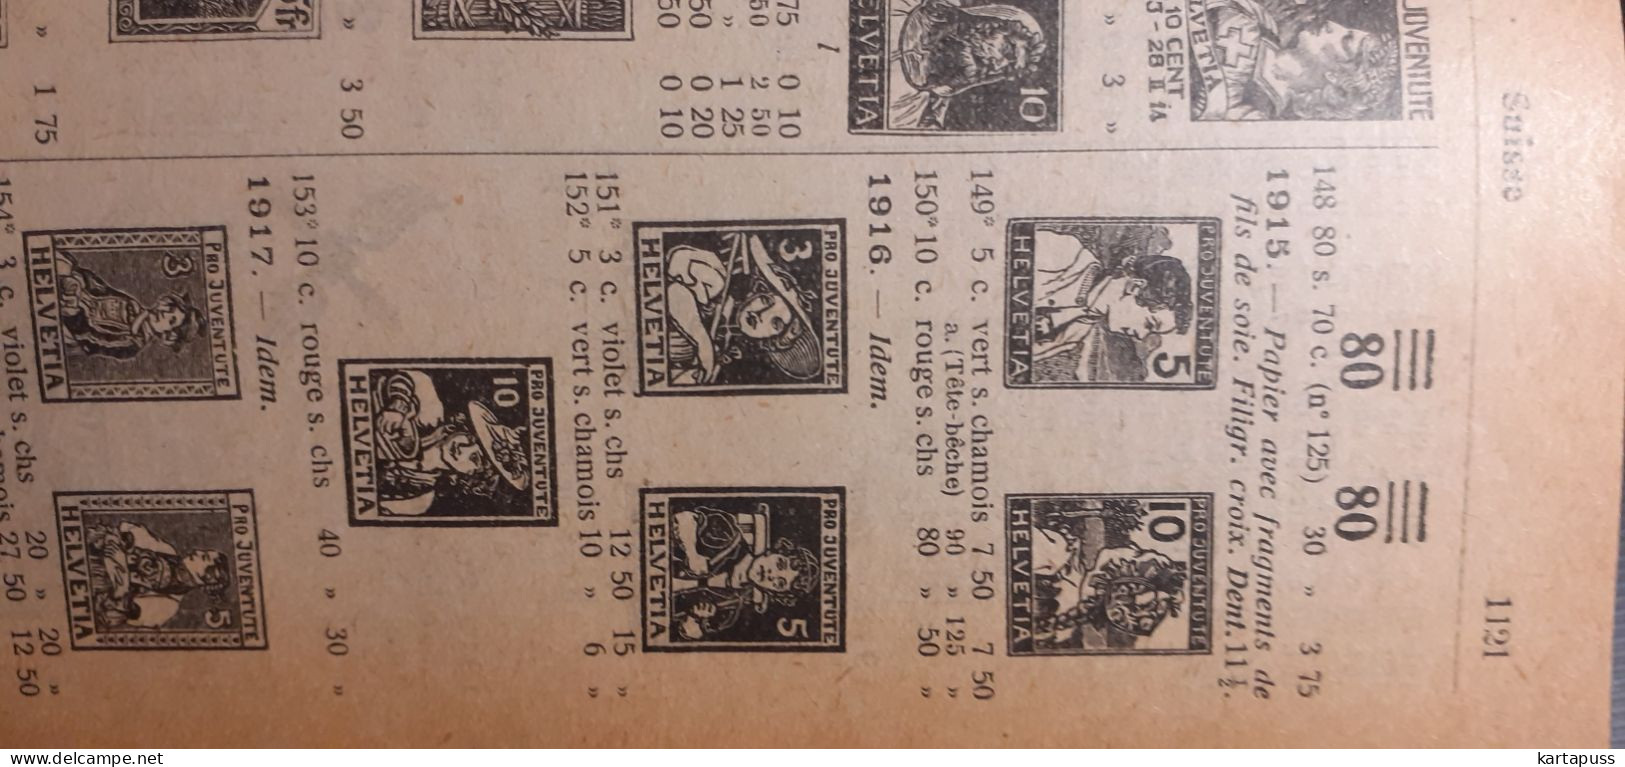 Catalogue De Timbres Postes Yvert & Tellier Champion 1929 - Frankreich